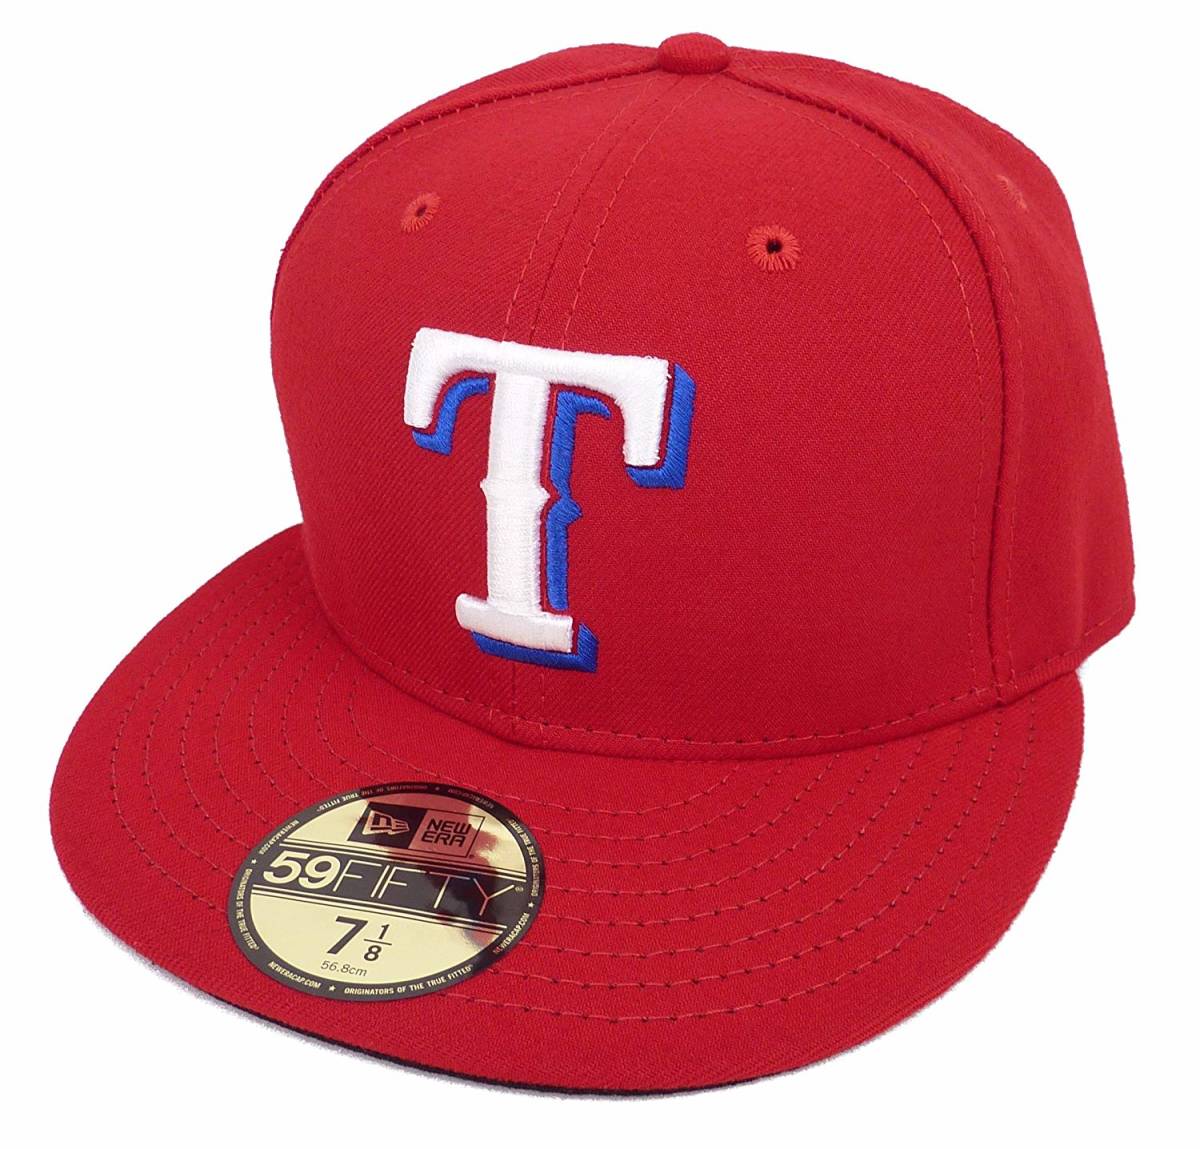 New Era ニューエラ MLB Texas Rangers テキサス レンジャース ベースボールキャップ（レッド） (7 1/8 56.8cm) [並行輸入品]